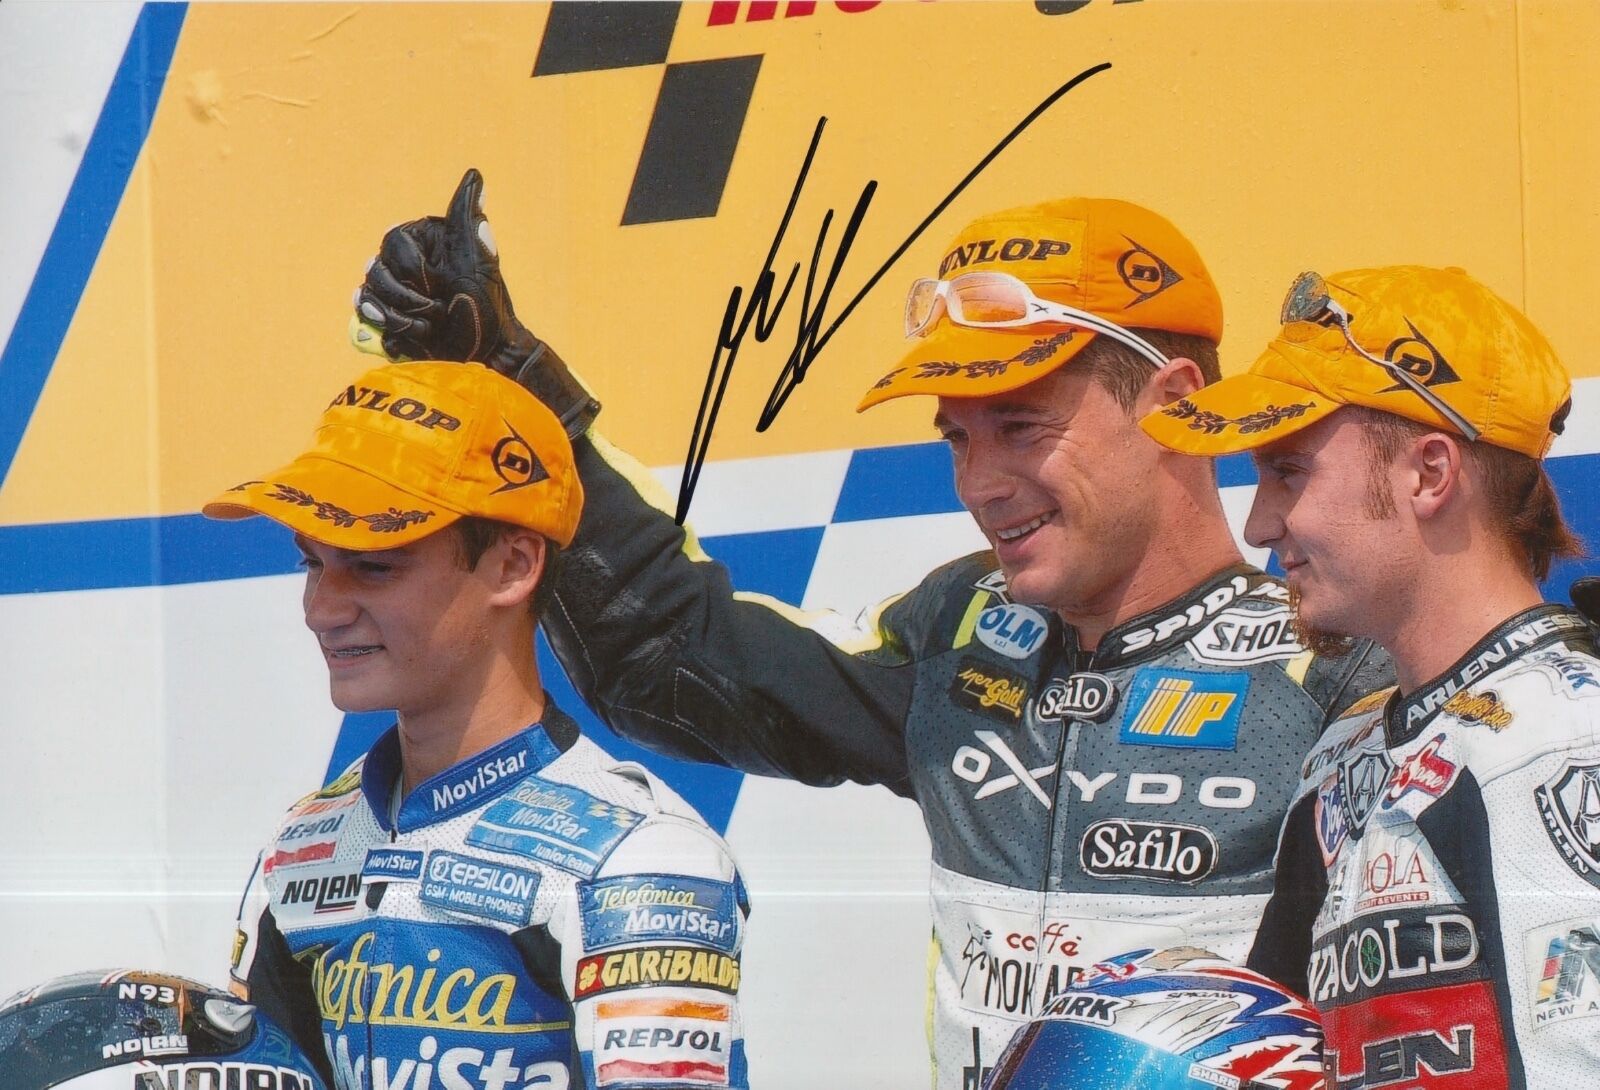 Lucio Cecchinello Hand Signed Photo Poster painting 12x8 125cc MotoGP.